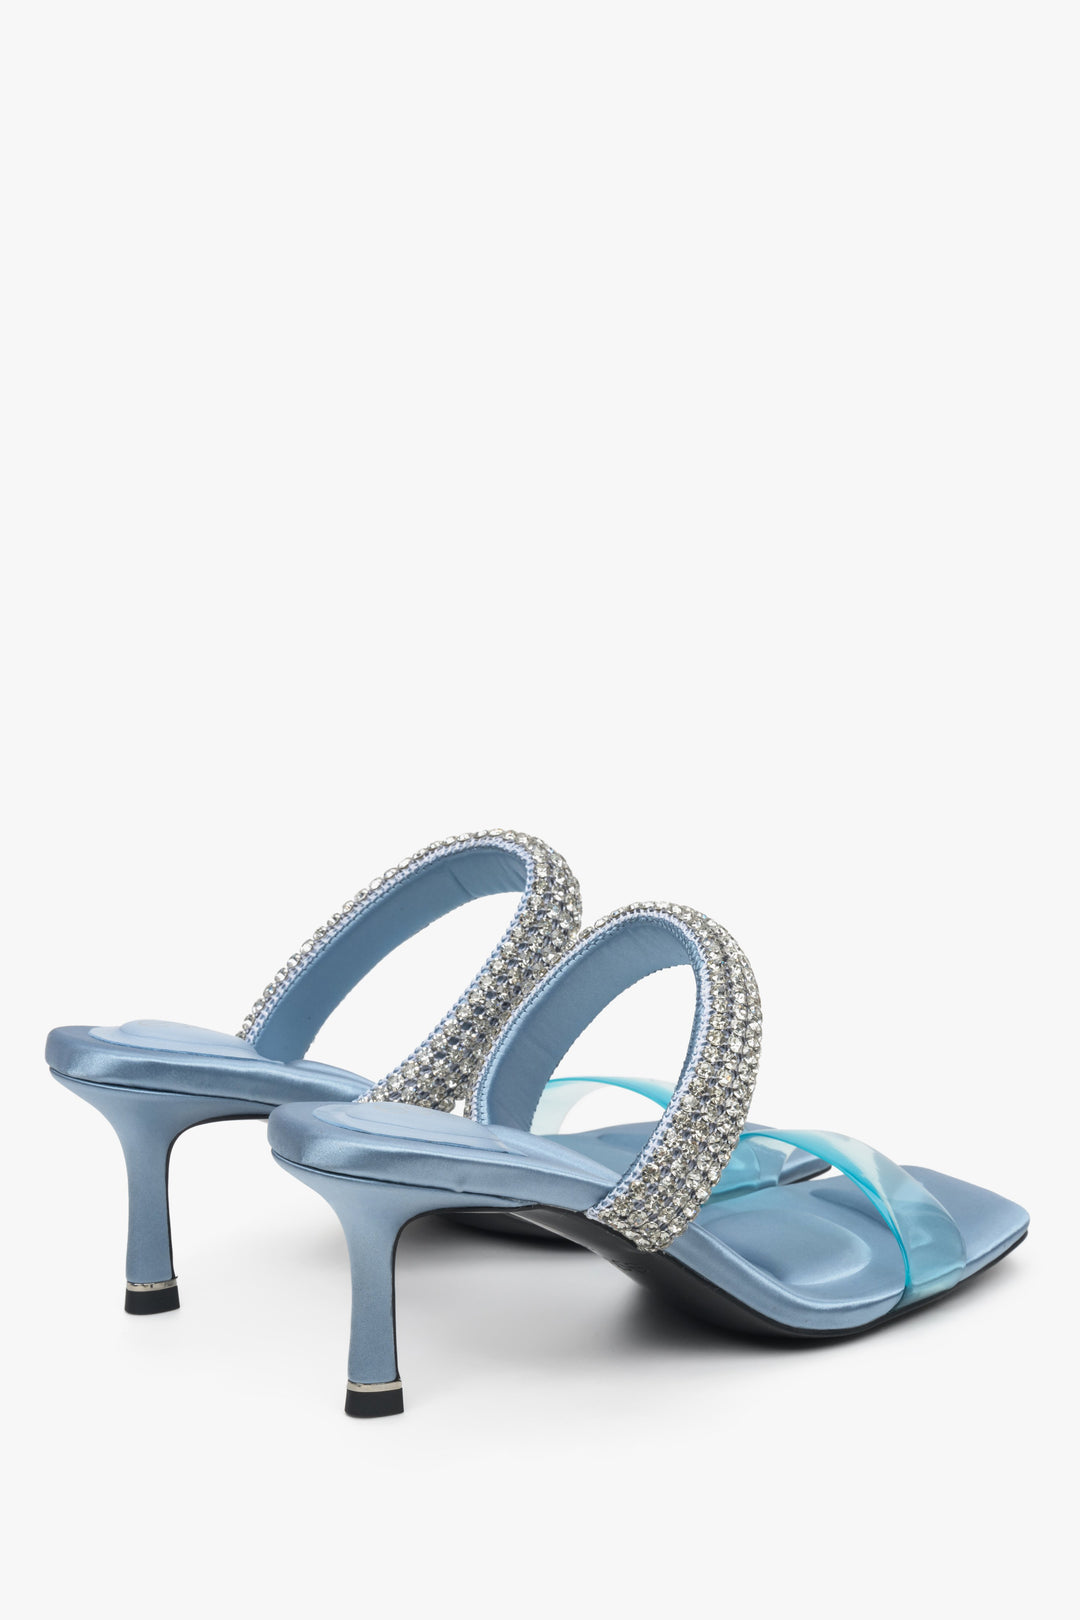 Women's blue stiletto slide sandals with zirconia, Estro brand - close-up on heels and heel line.